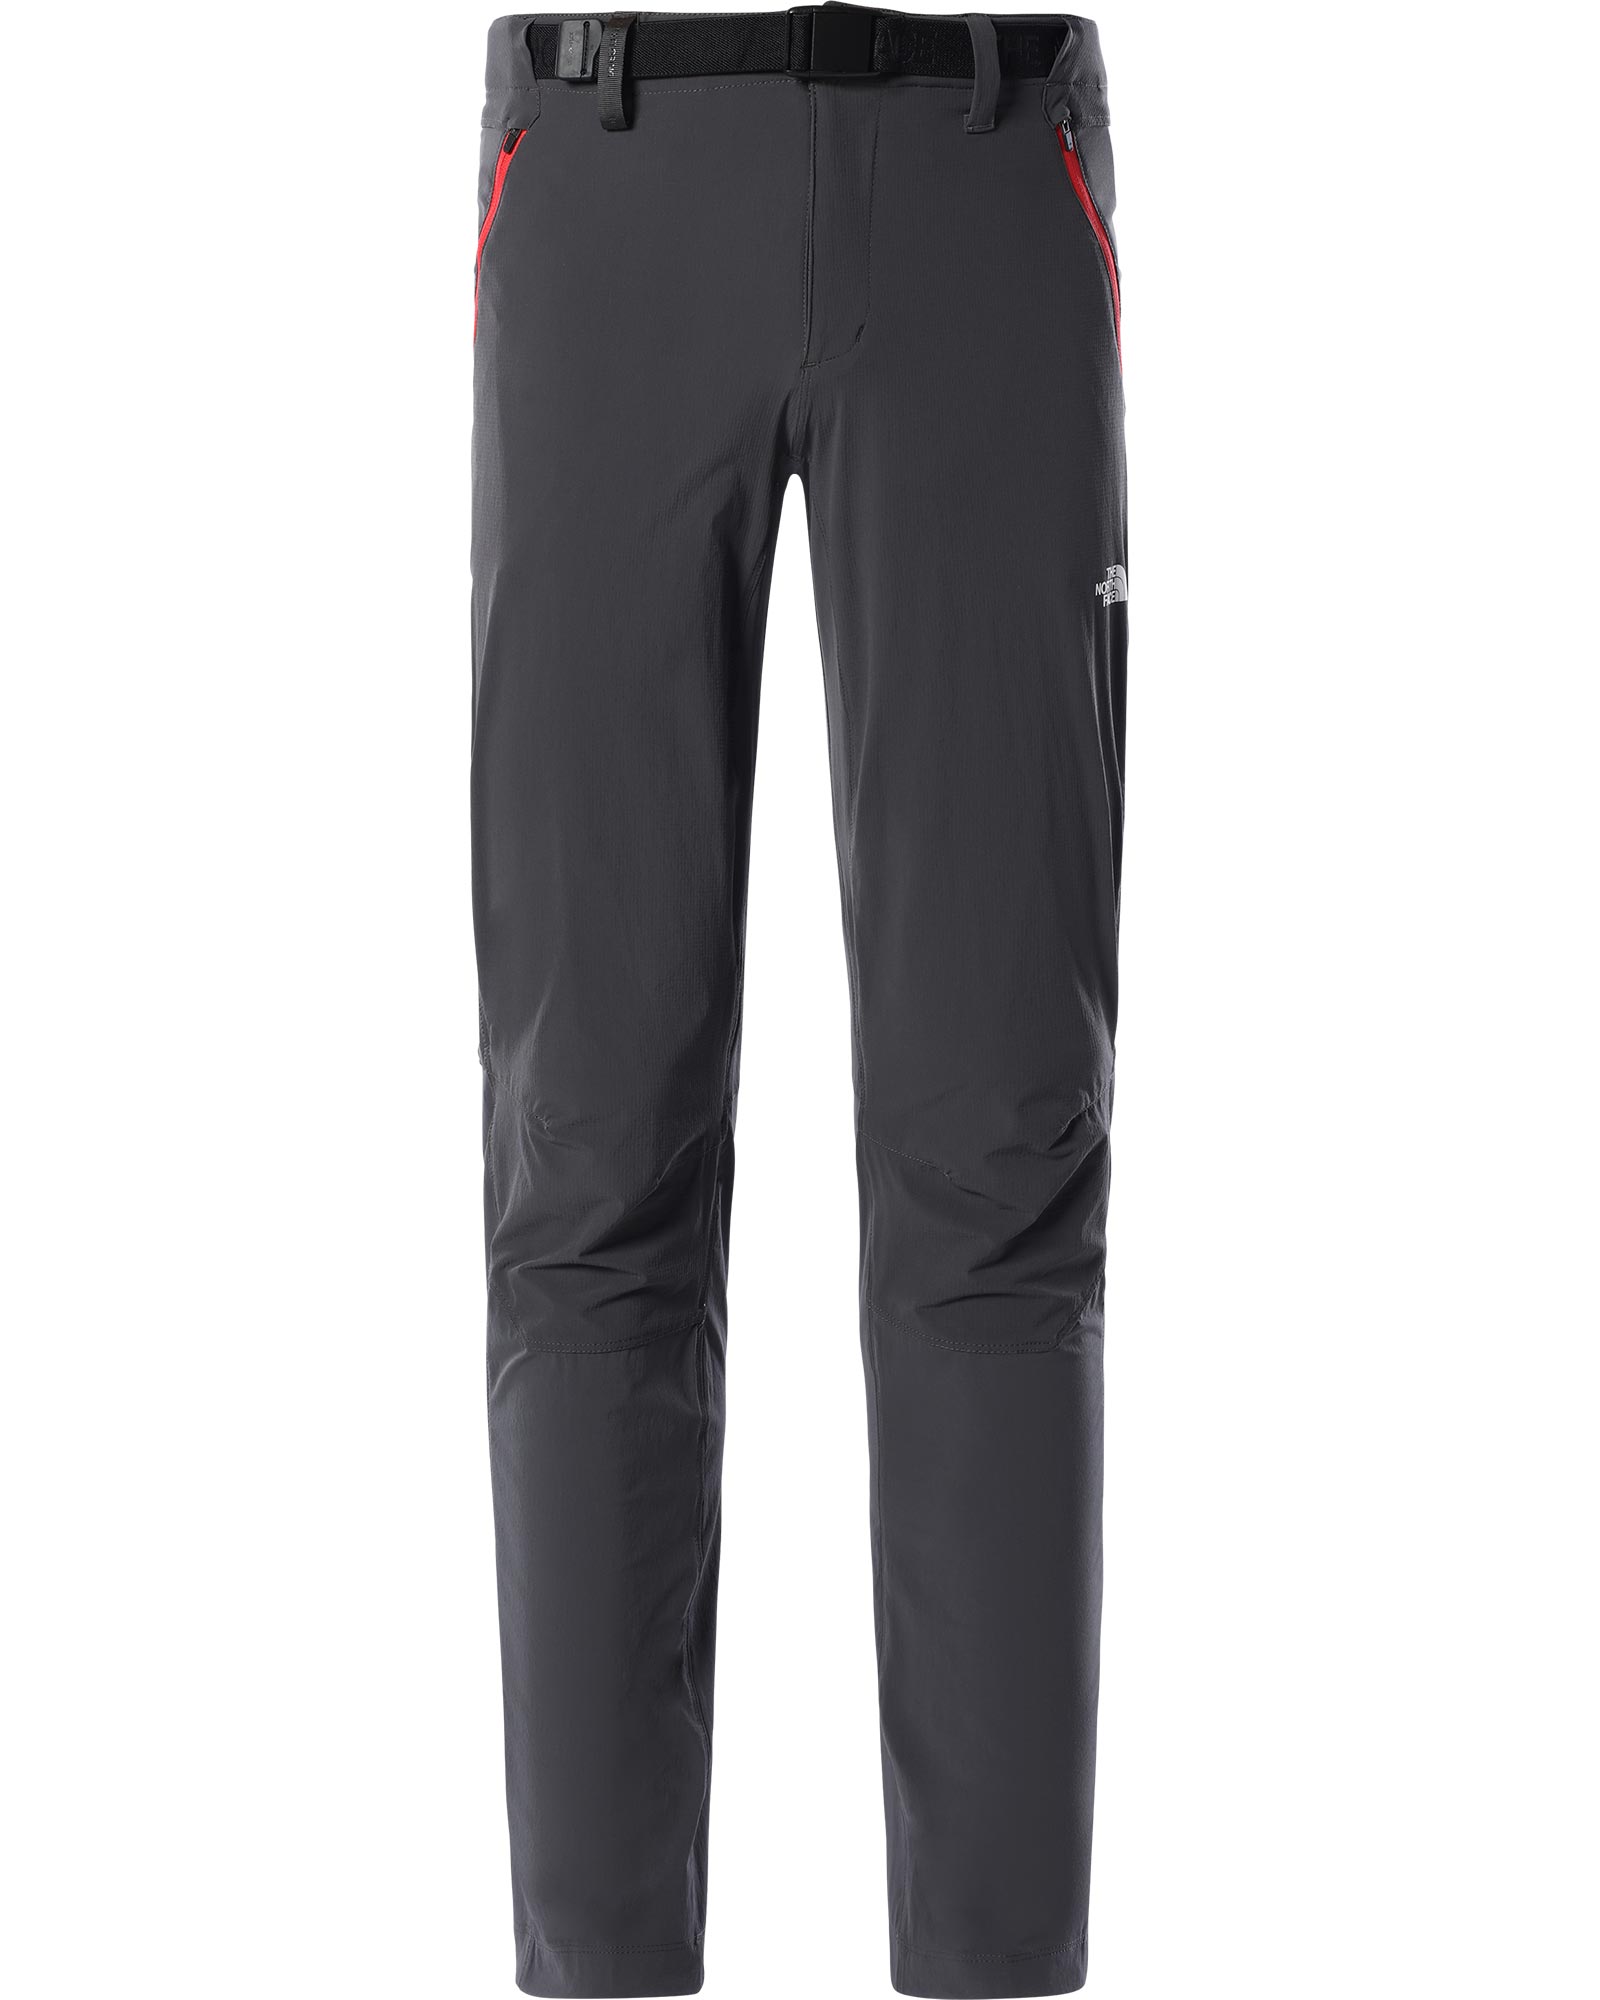 The North Face Speedlight 2 Women’s Pants - Asphalt Grey/Horizon Red 10